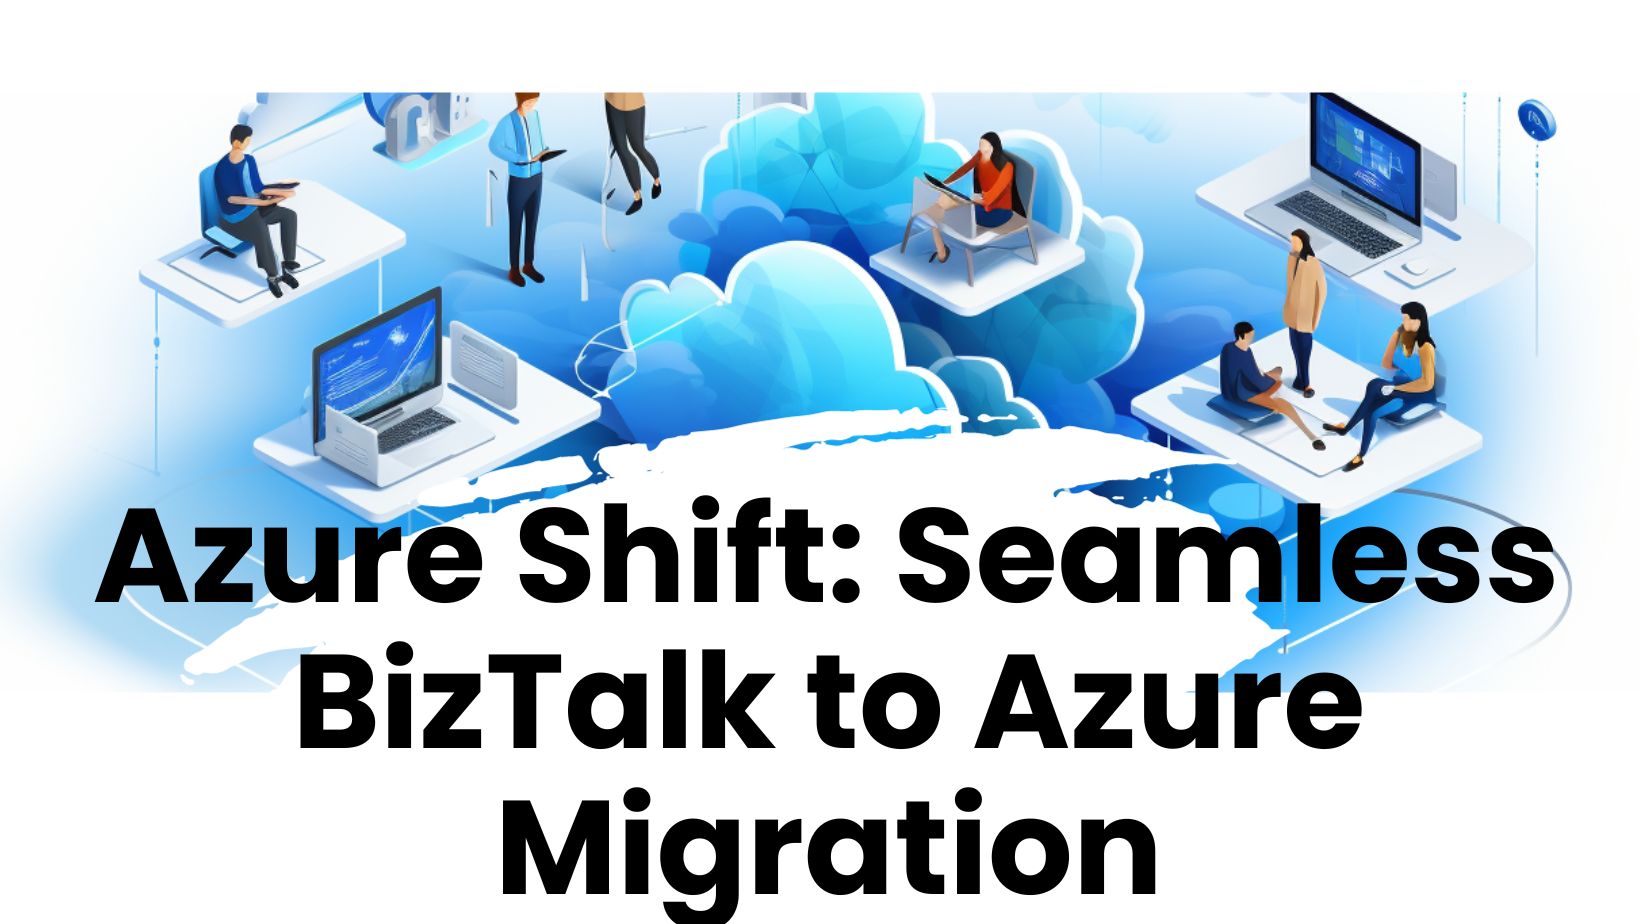 Microsoft Azure Shift: Seamless BizTalk to Azure Migration